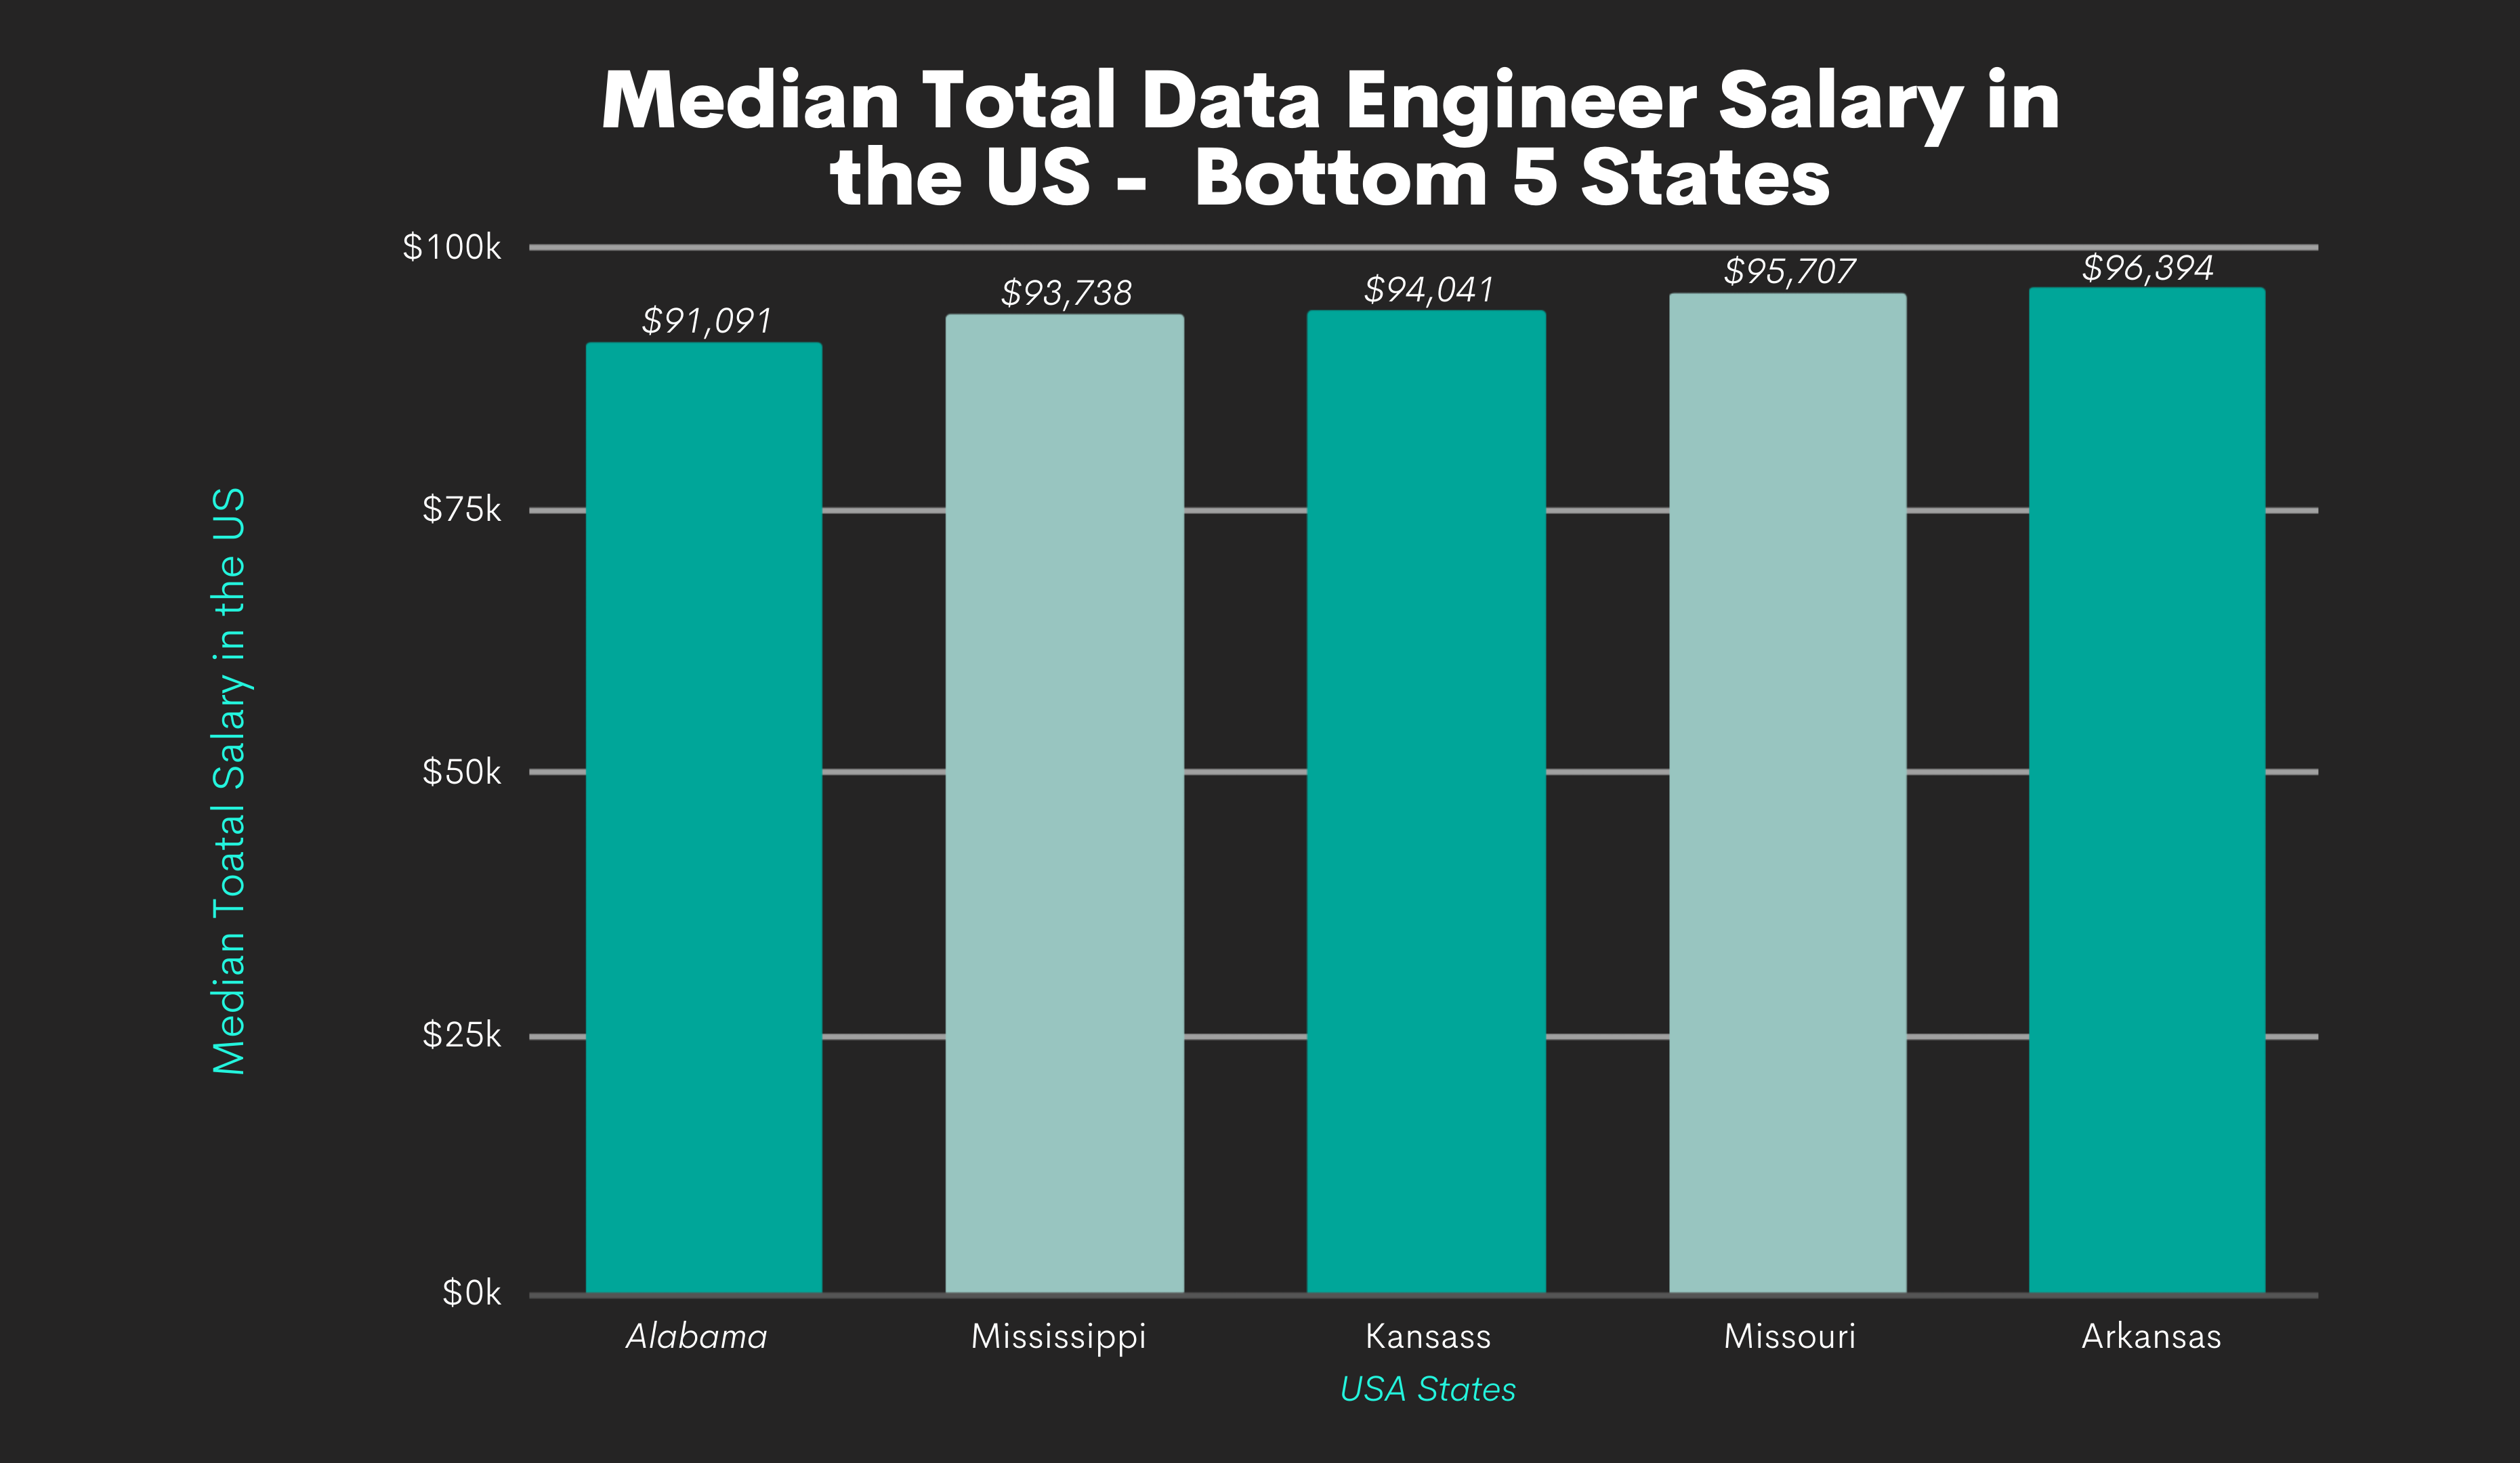 Data Engineer Salaries by Bottom 5 State